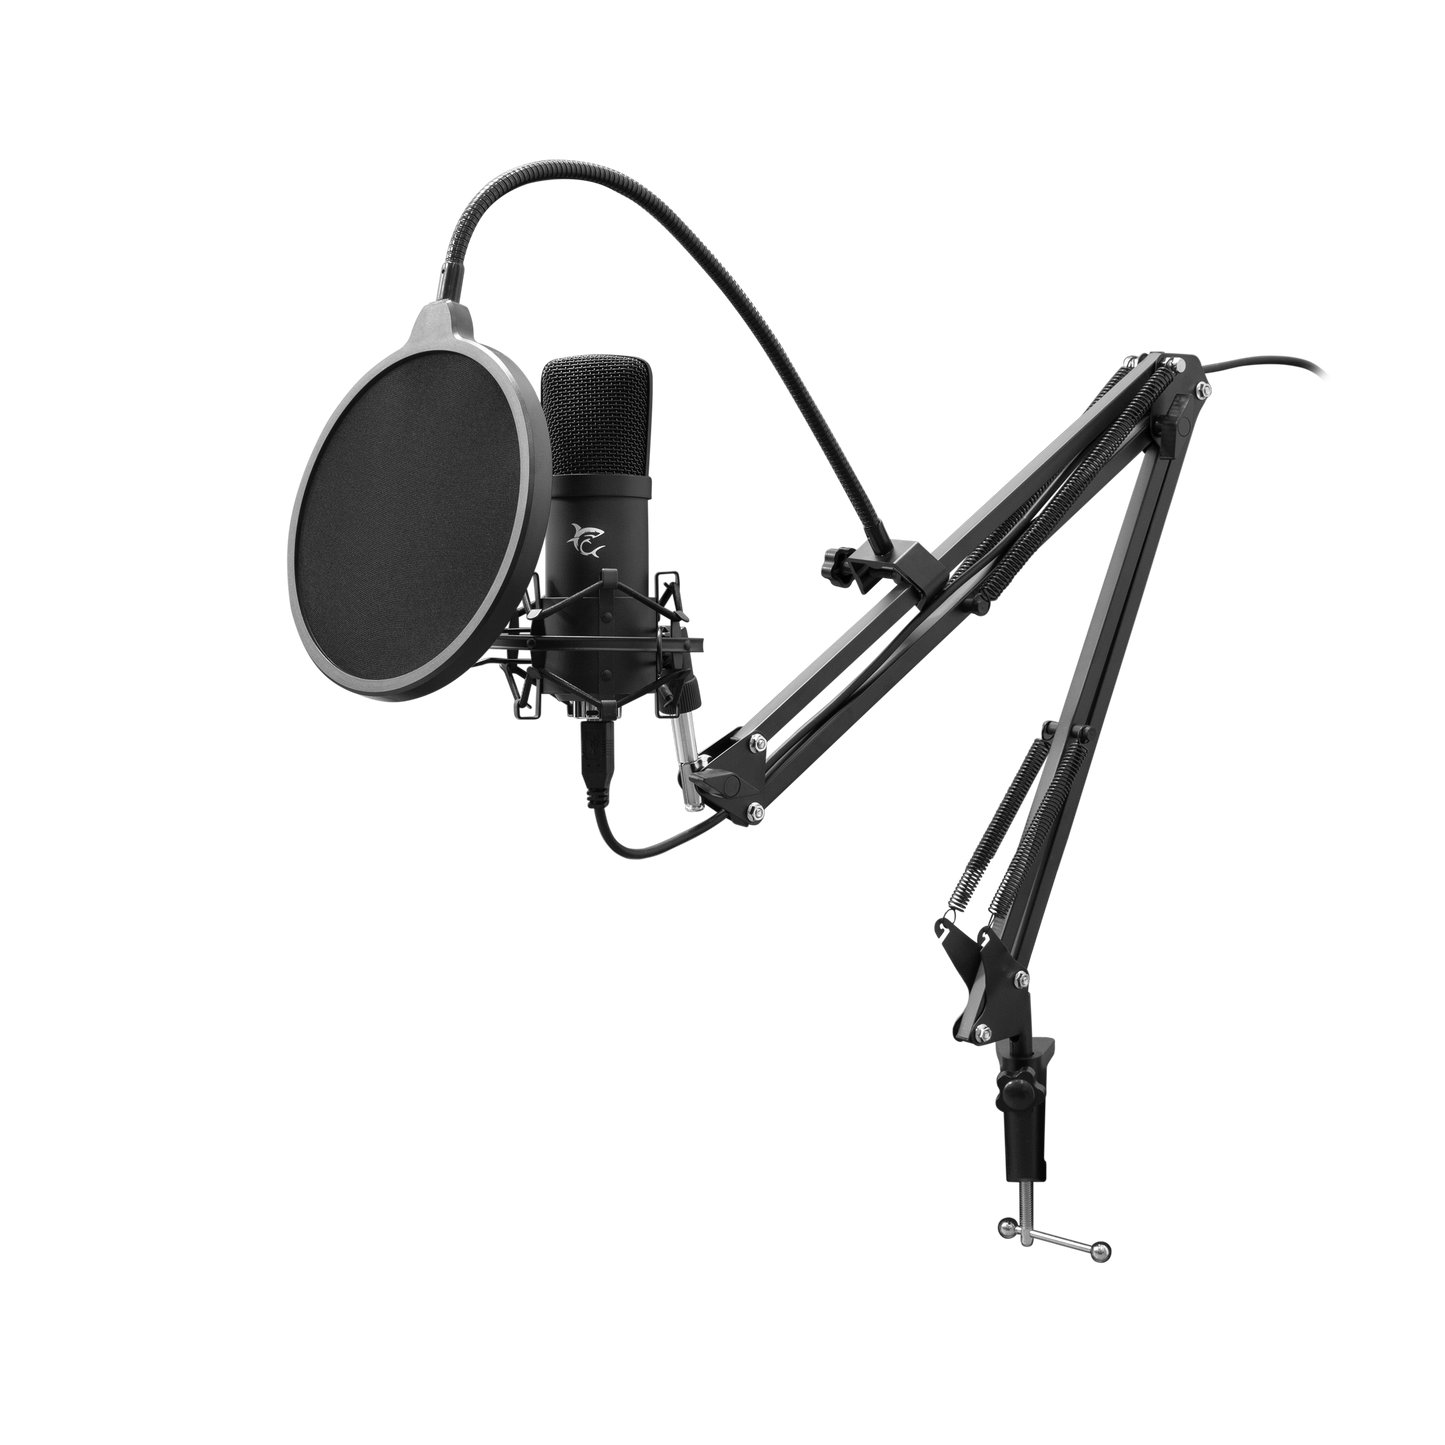 ZONIS - Condenser Microphone